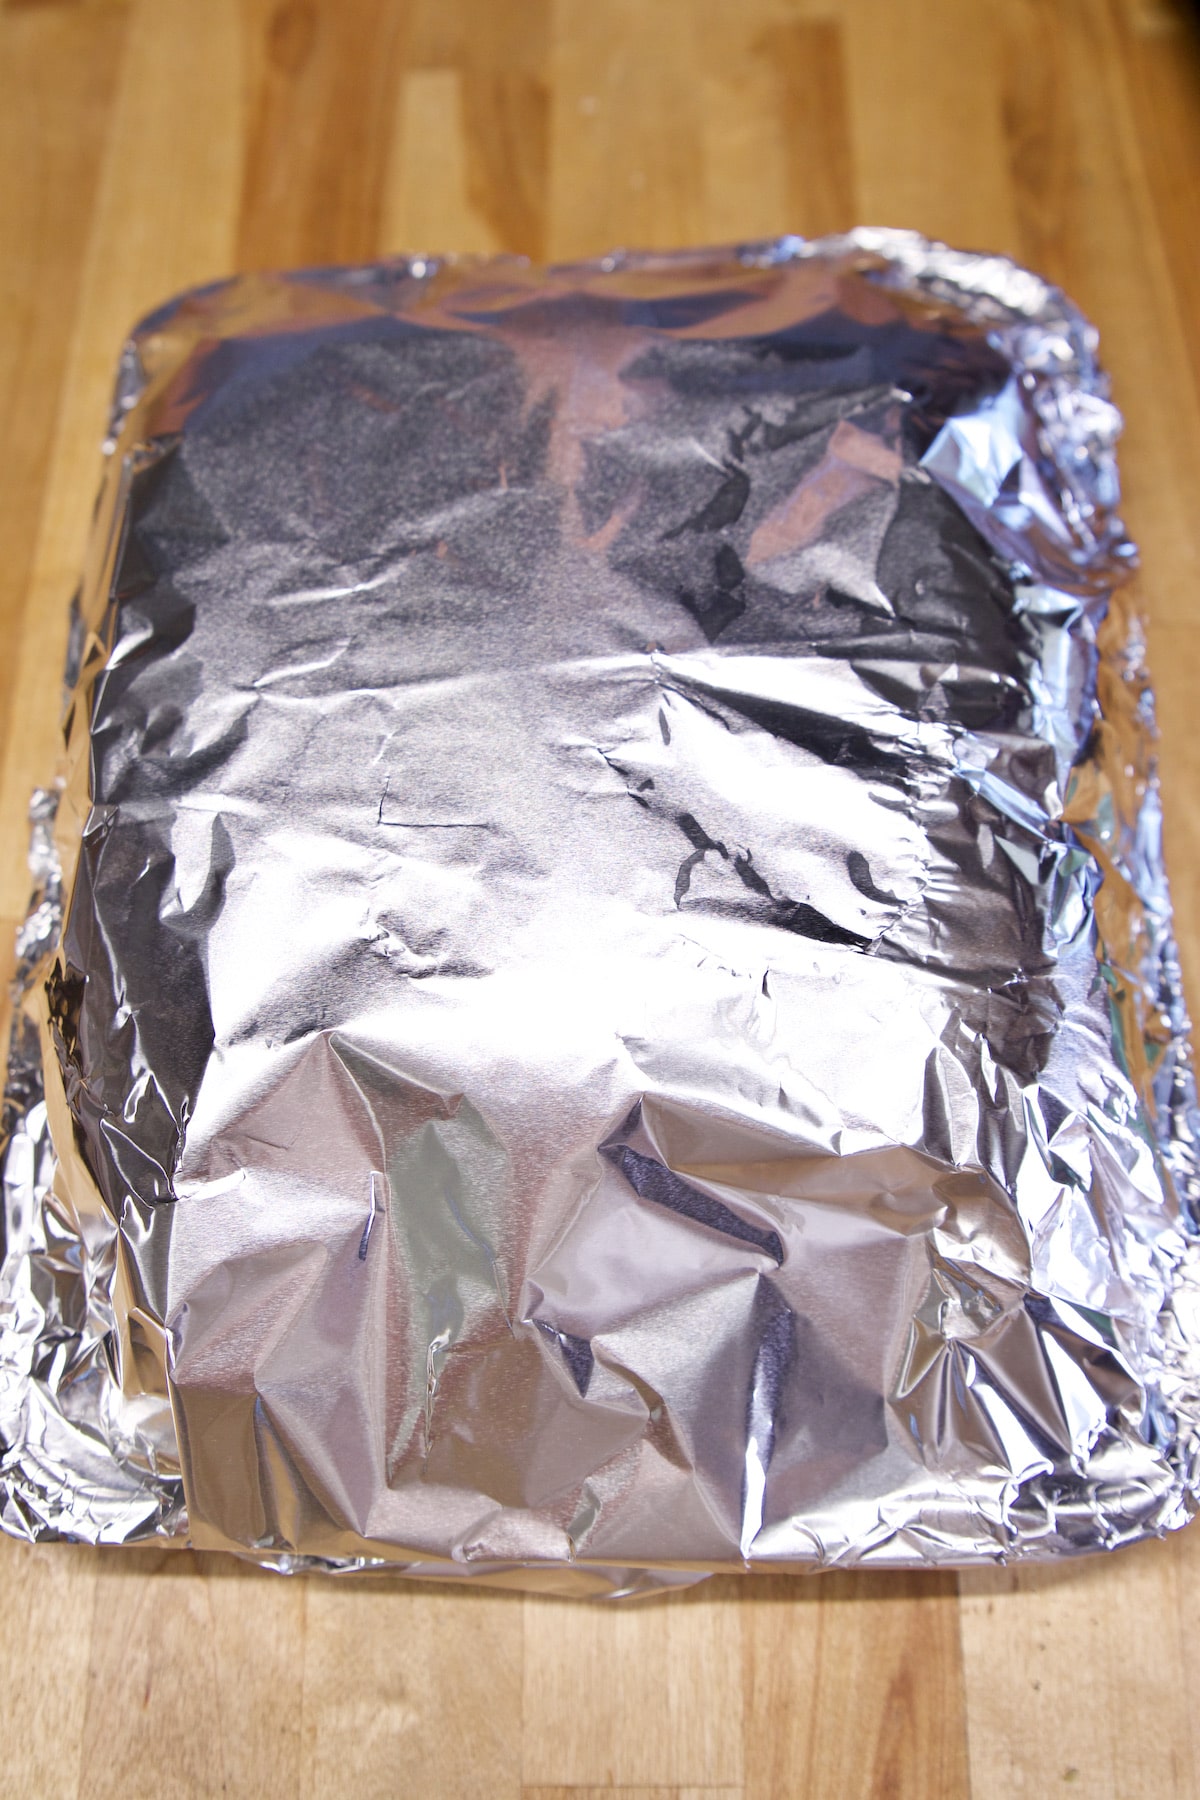 Aluminum foil covered pan.